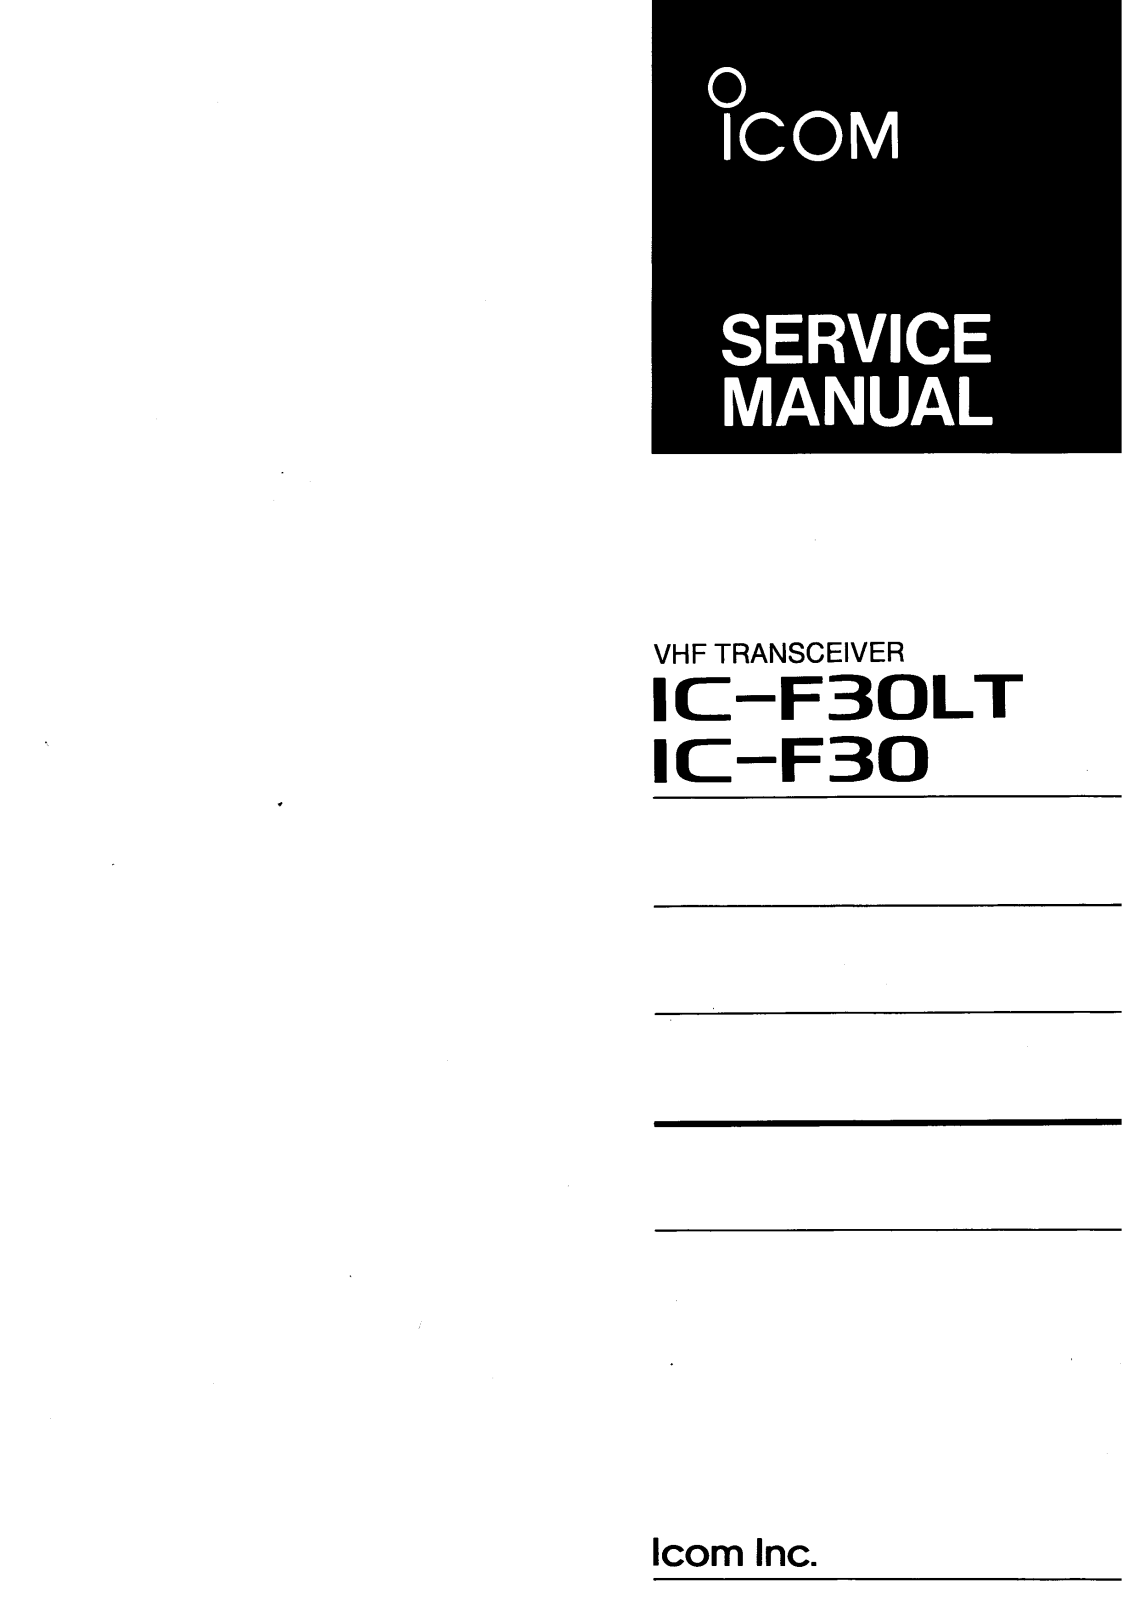 Icom IC-F30, IC-F30LT Service Manual